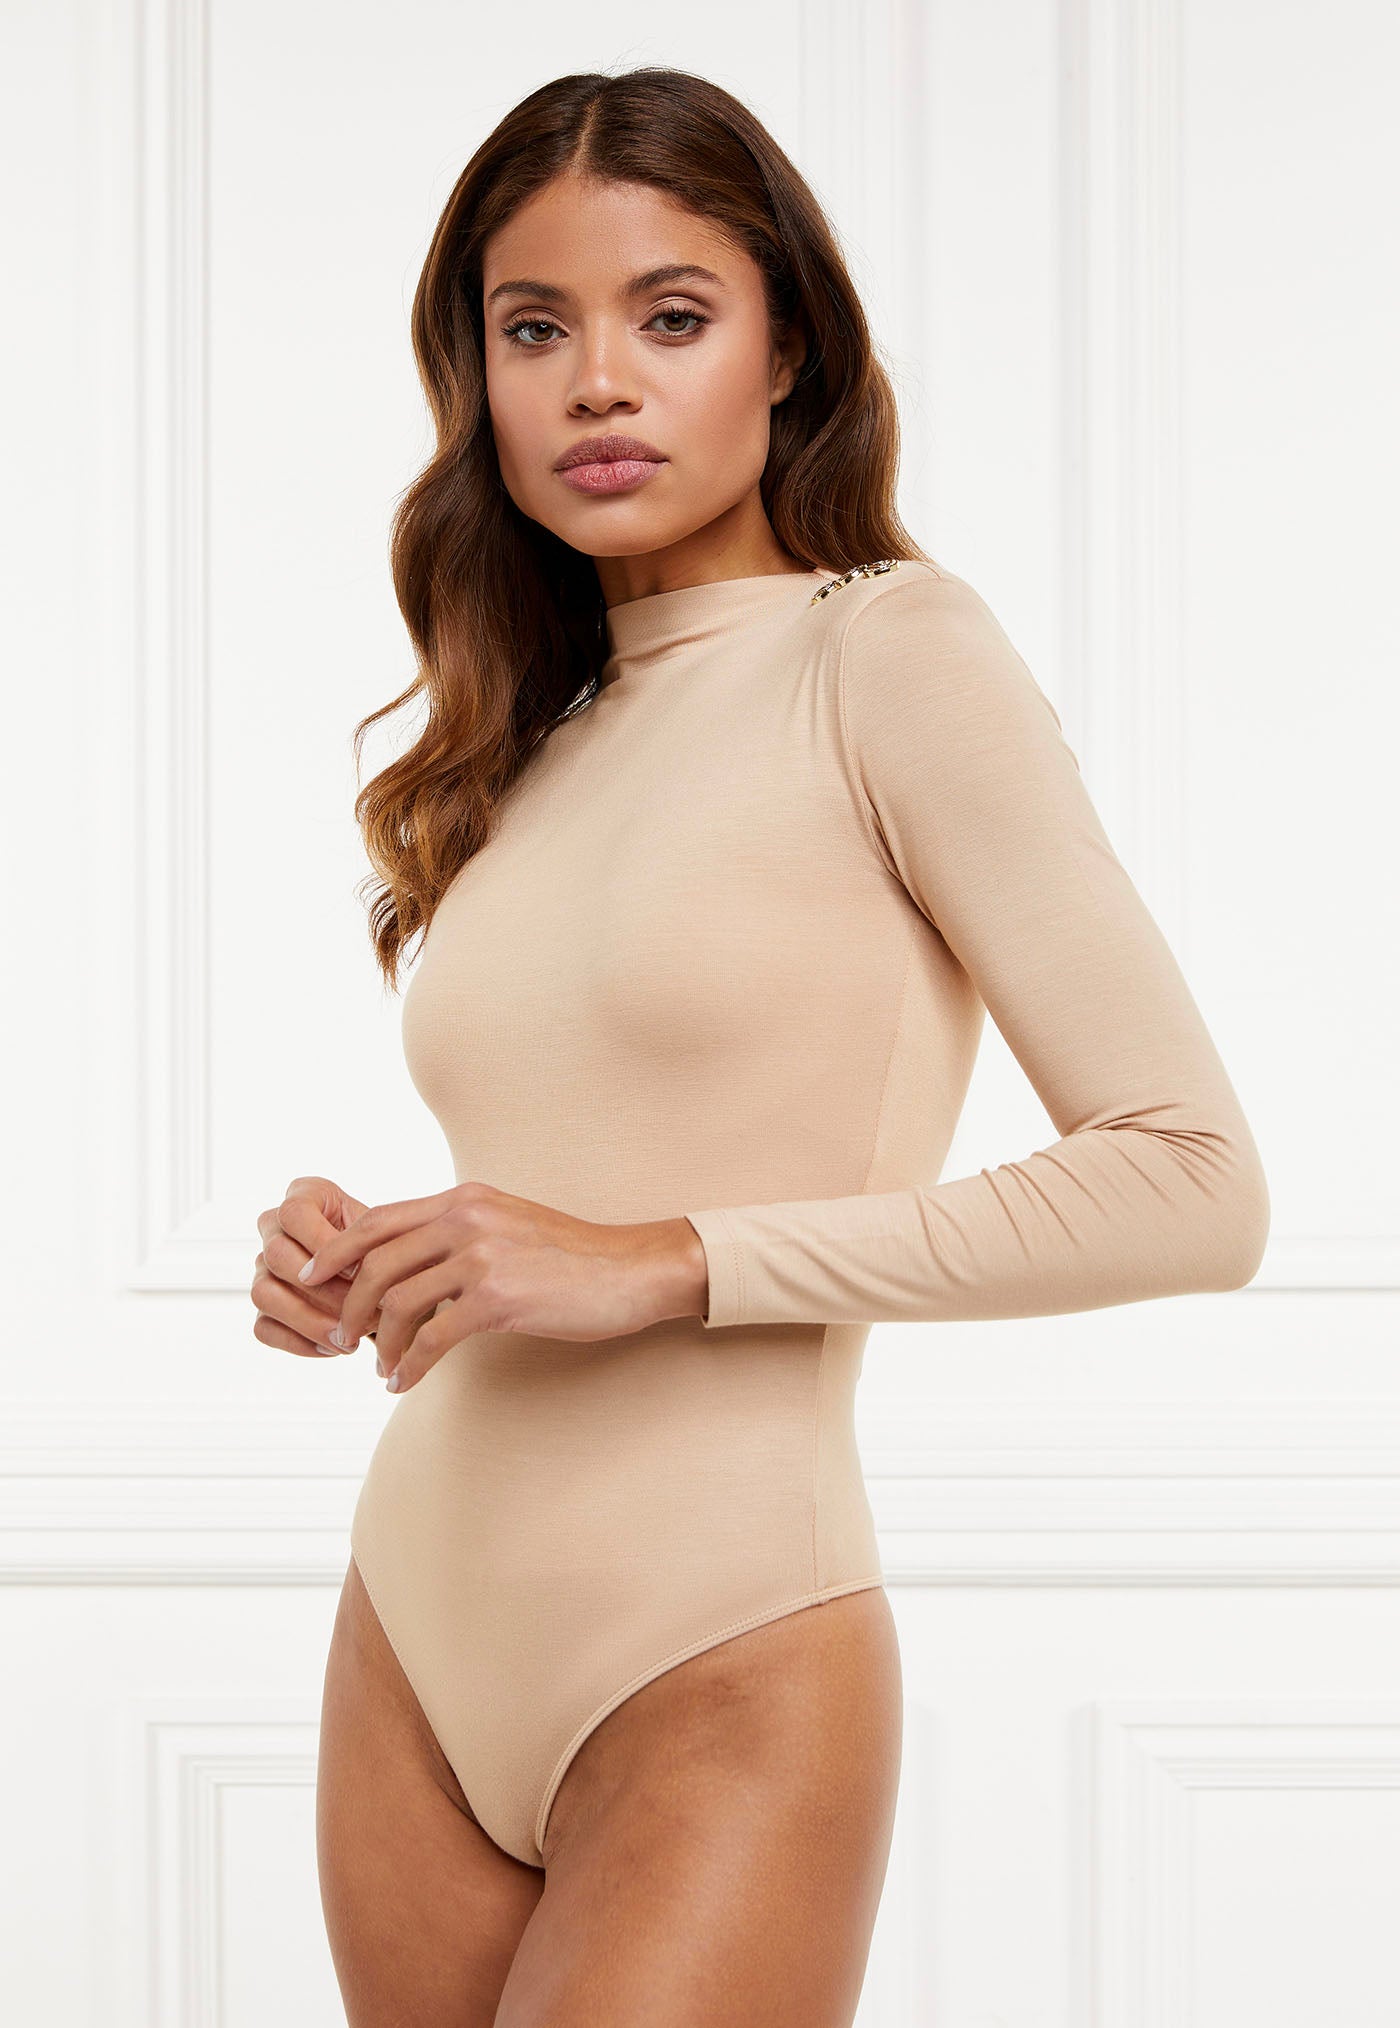 Harper Long Sleeve Bodysuit - Light Camel sold by Angel Divine